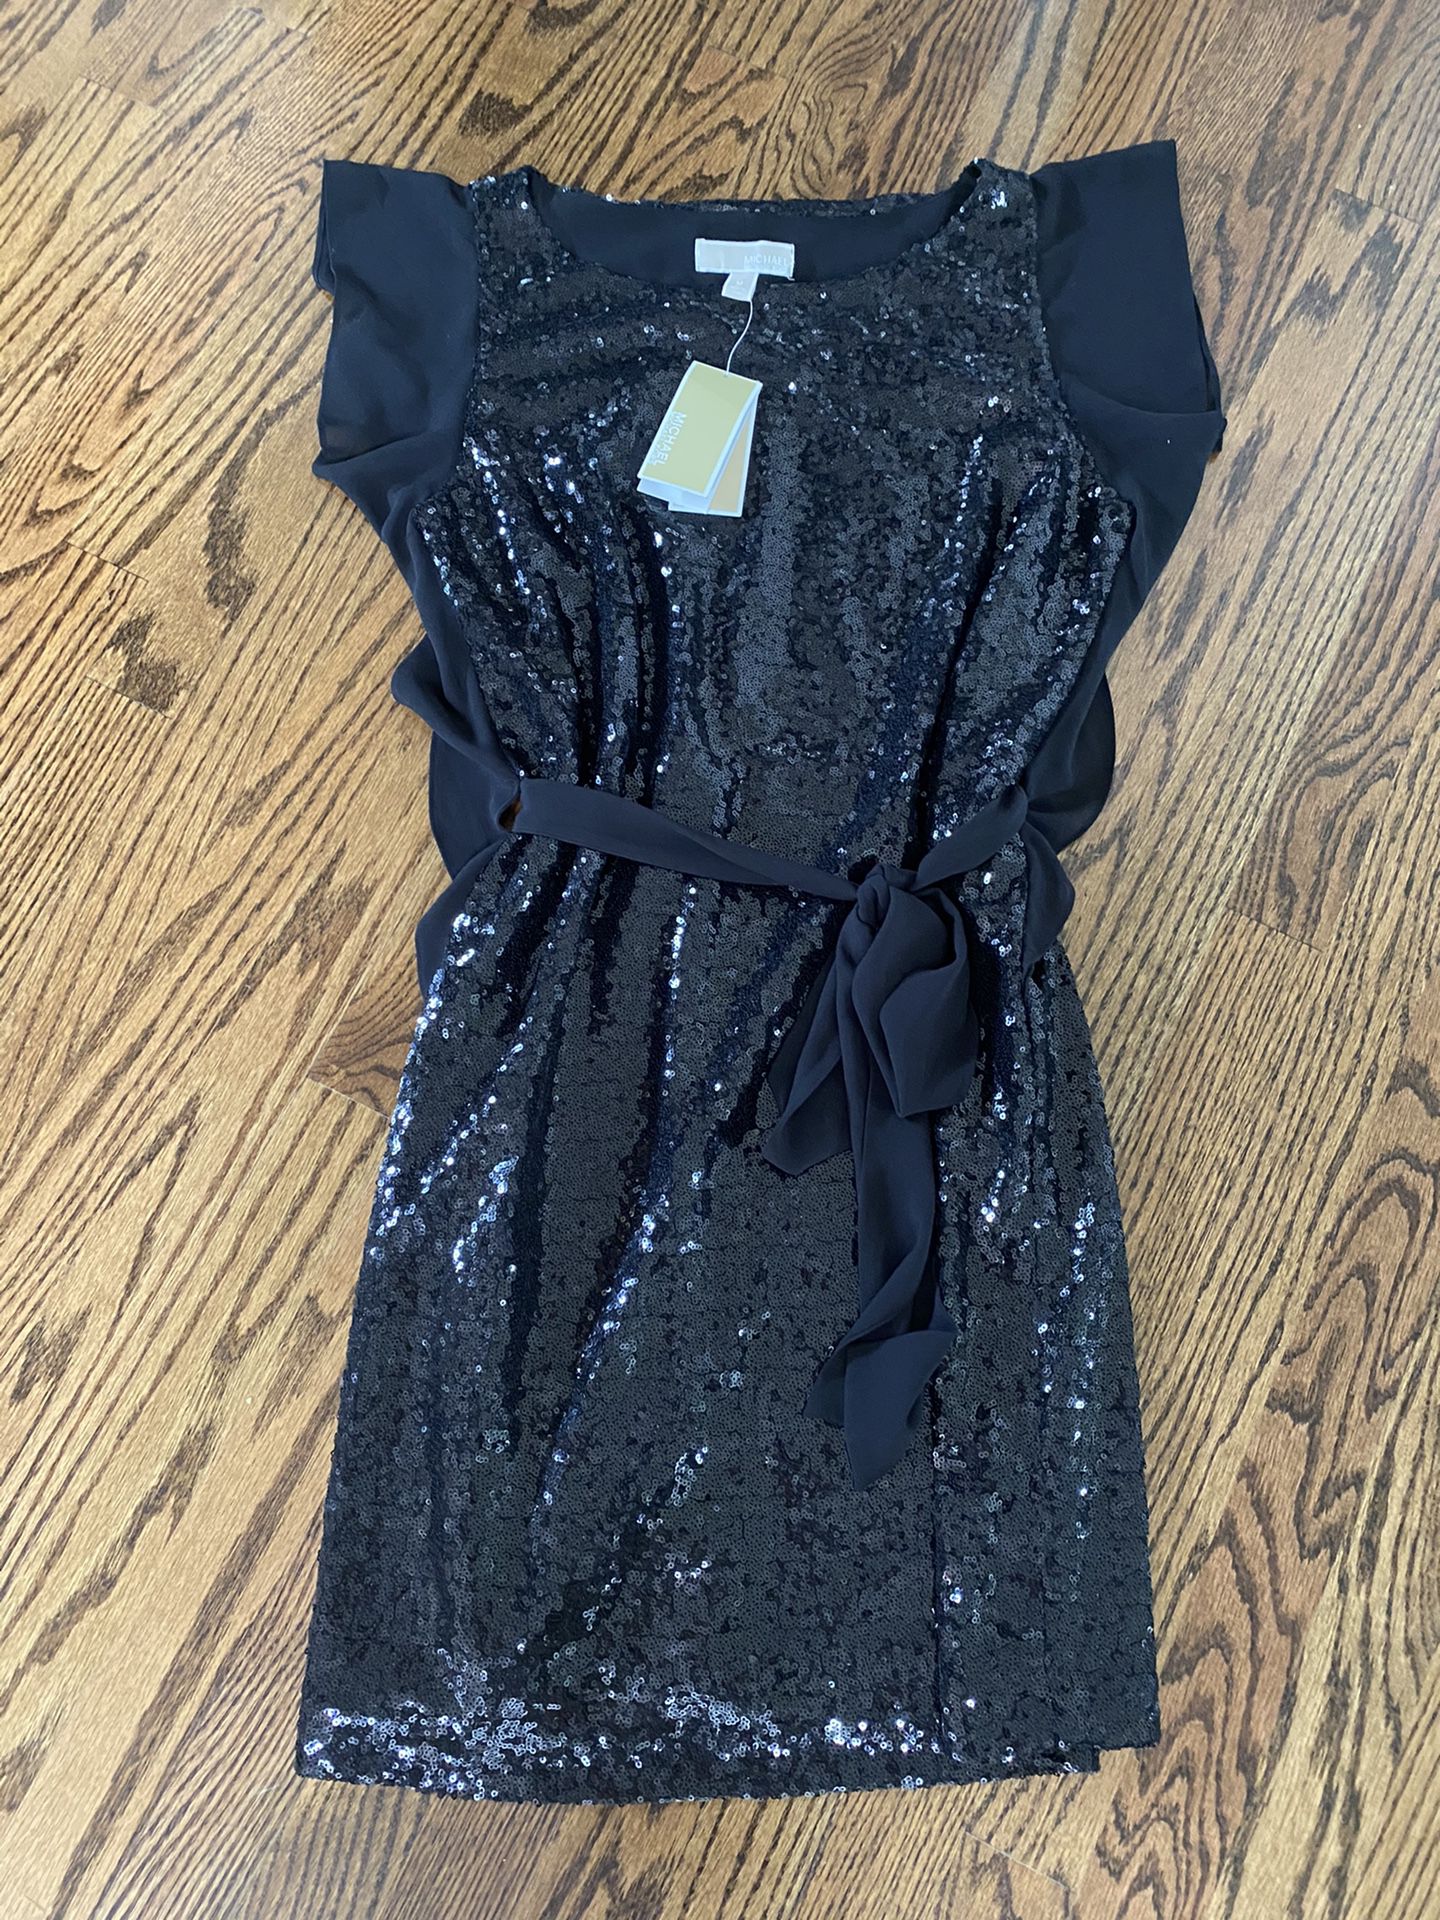 Michael Kors Black Sequin Dress -Size Medium (NEW)